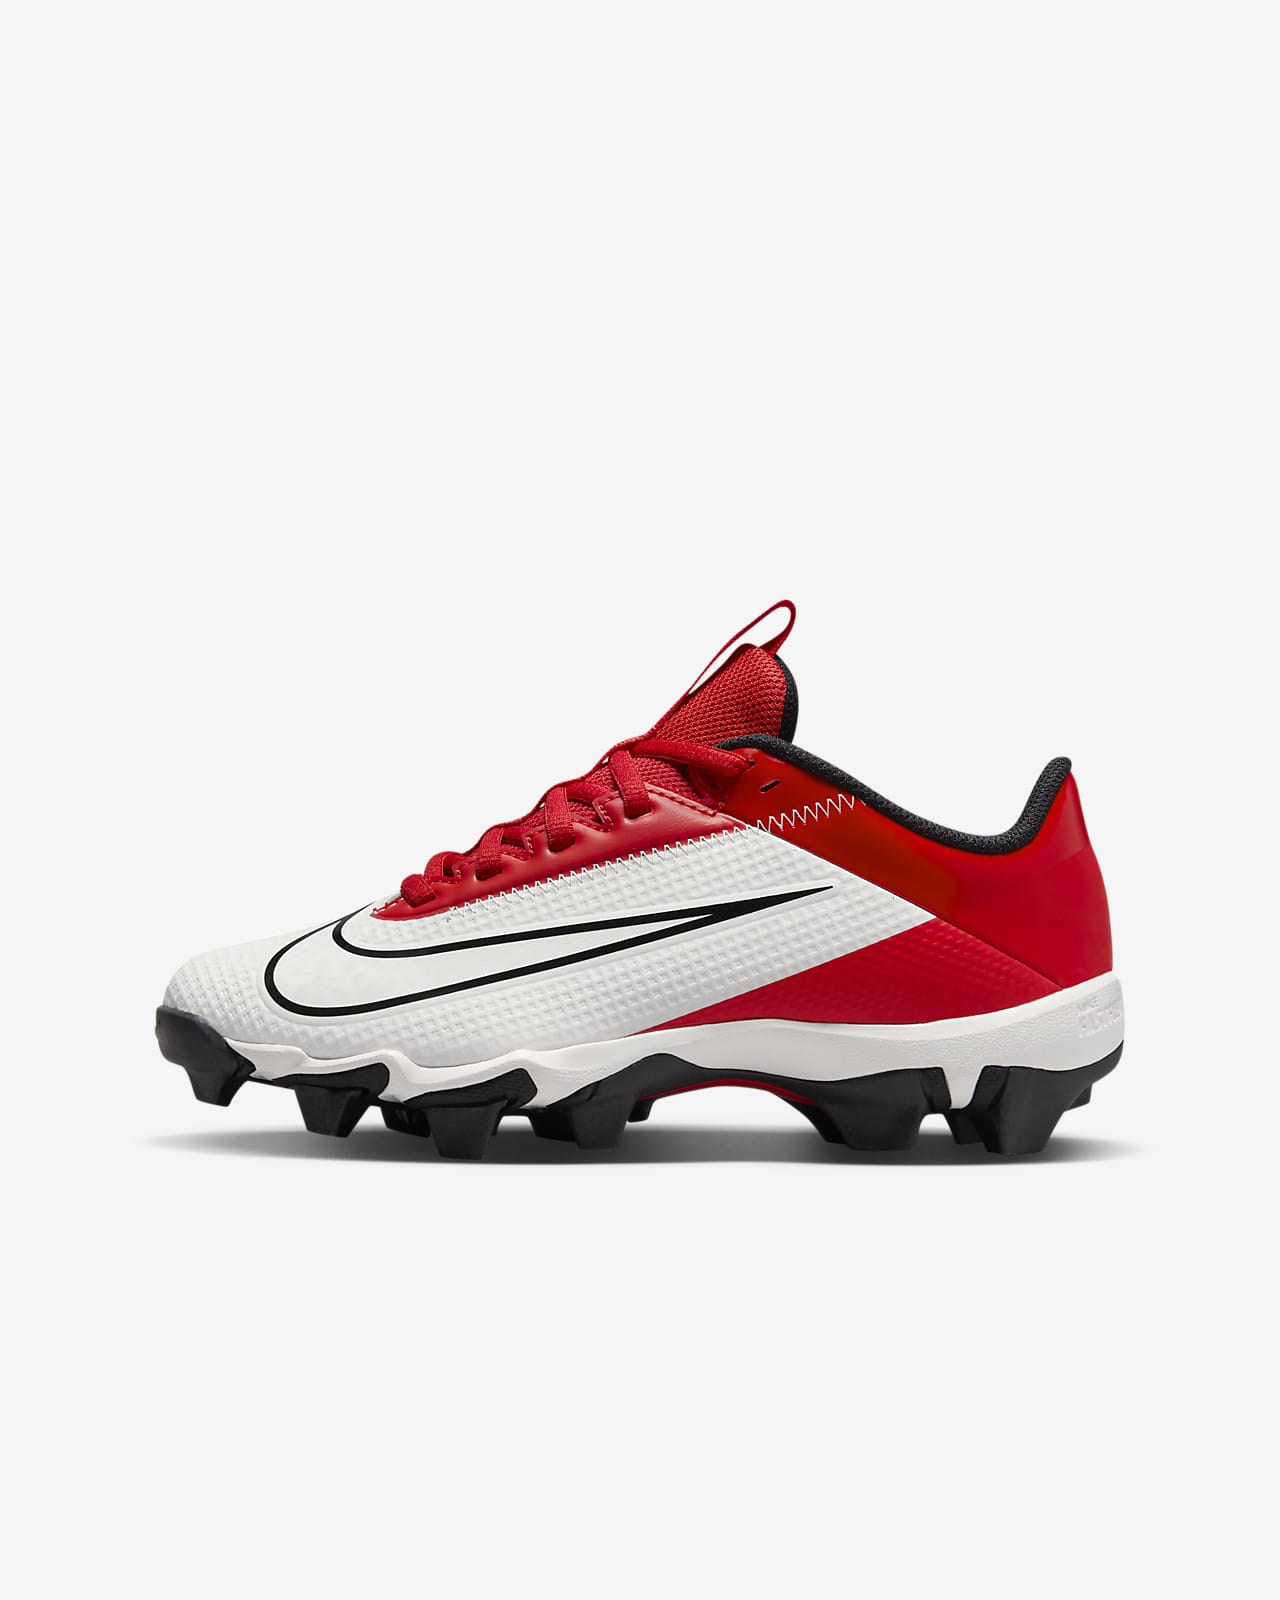 All Nike Football Shoes | lupon.gov.ph